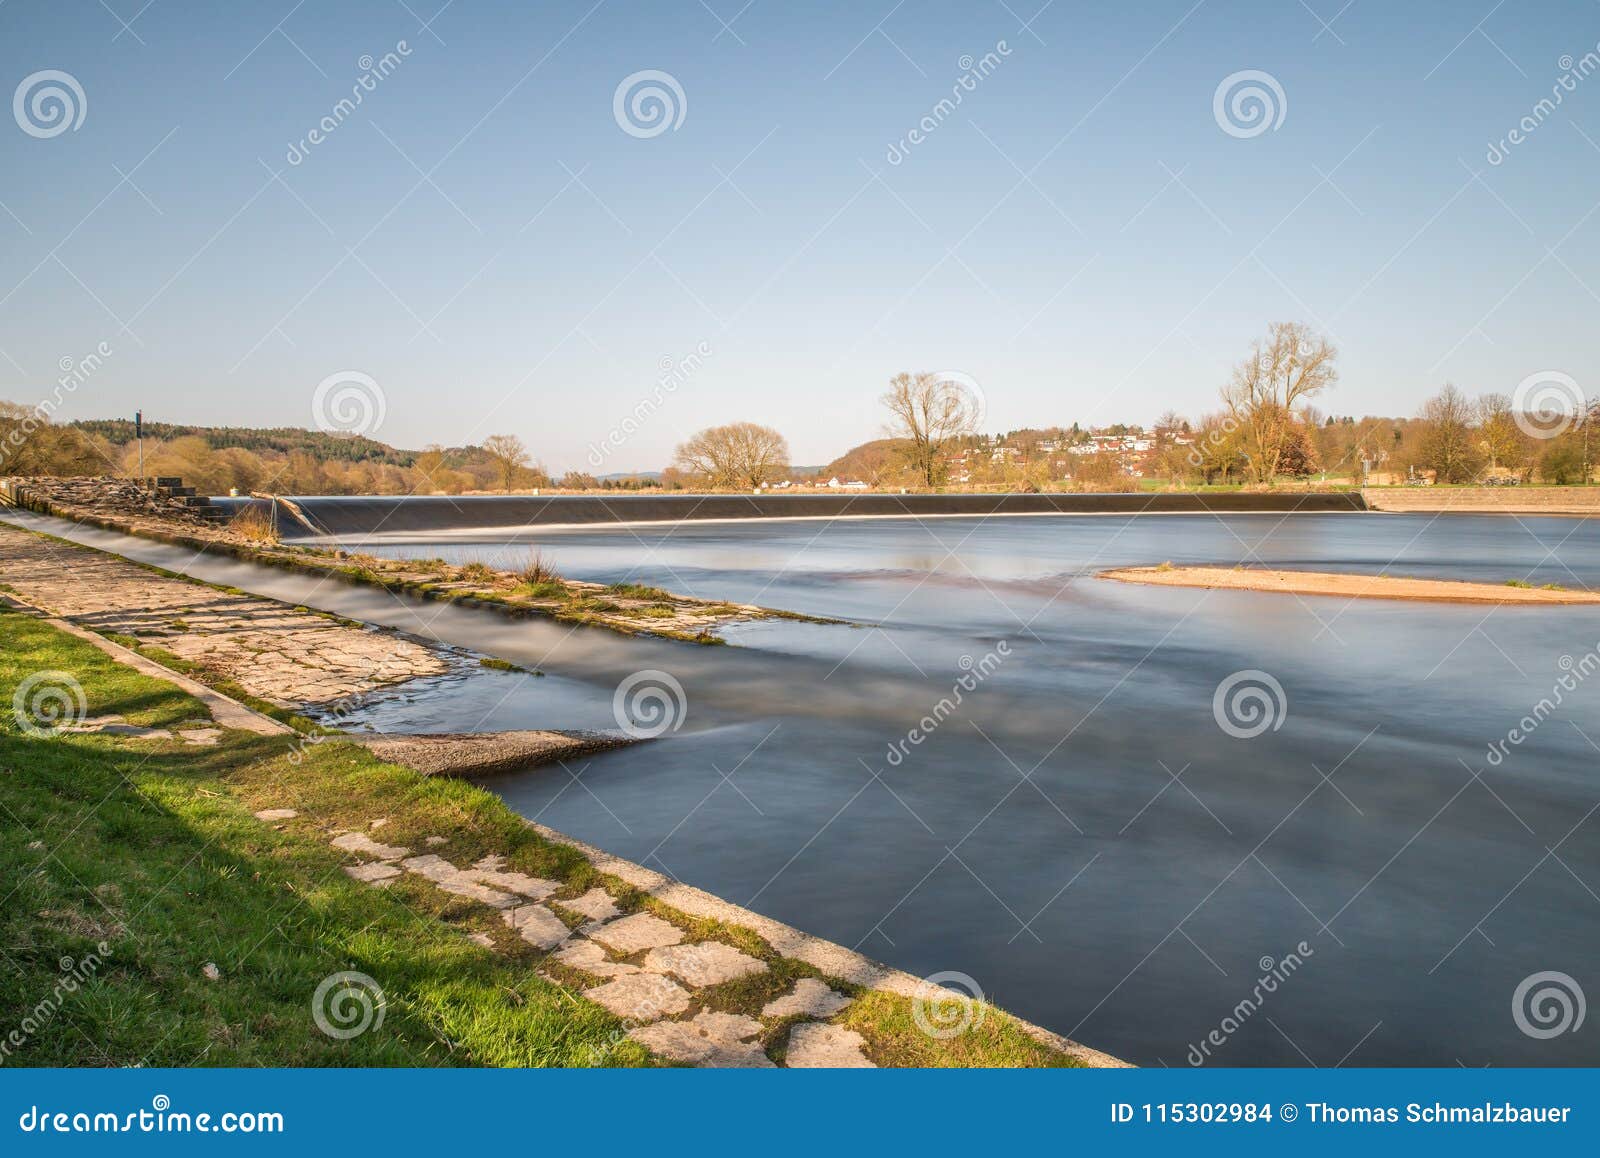 river bath pielmÃÂ¼hle at river regen in lappersdorf near regensburg, bavaria, germany